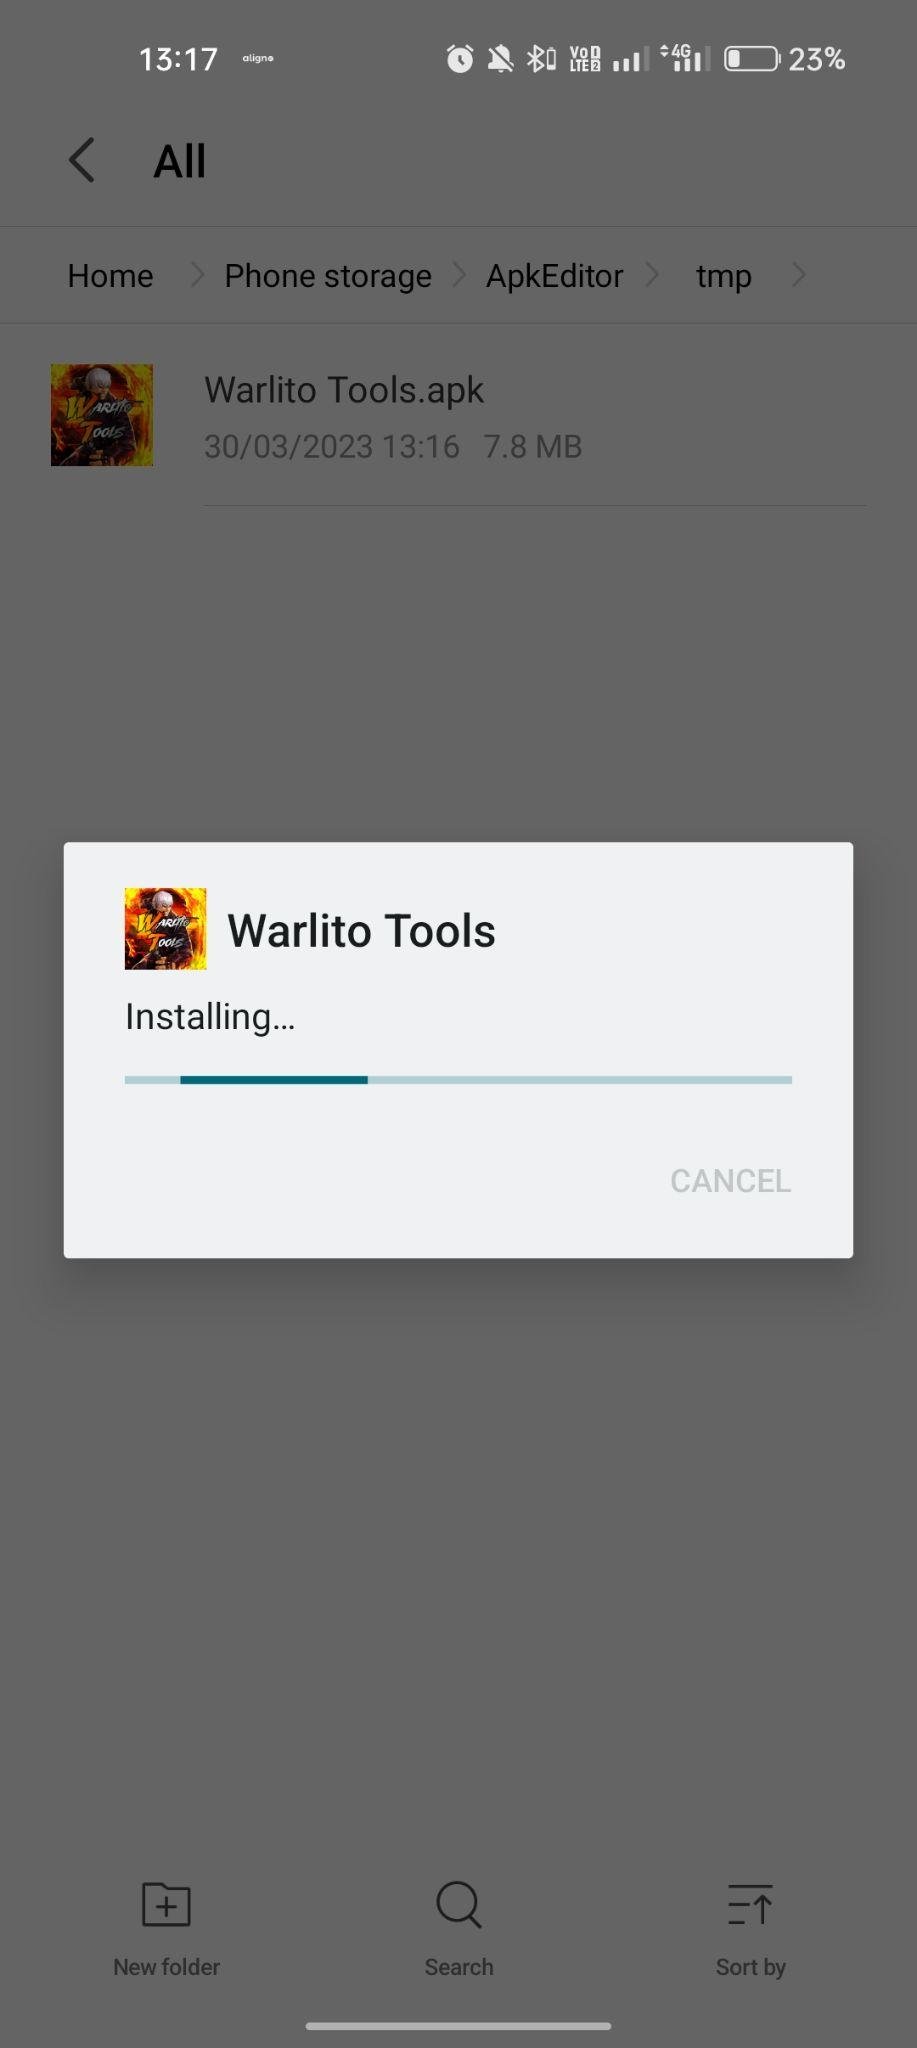 Warlito Tools apk installing